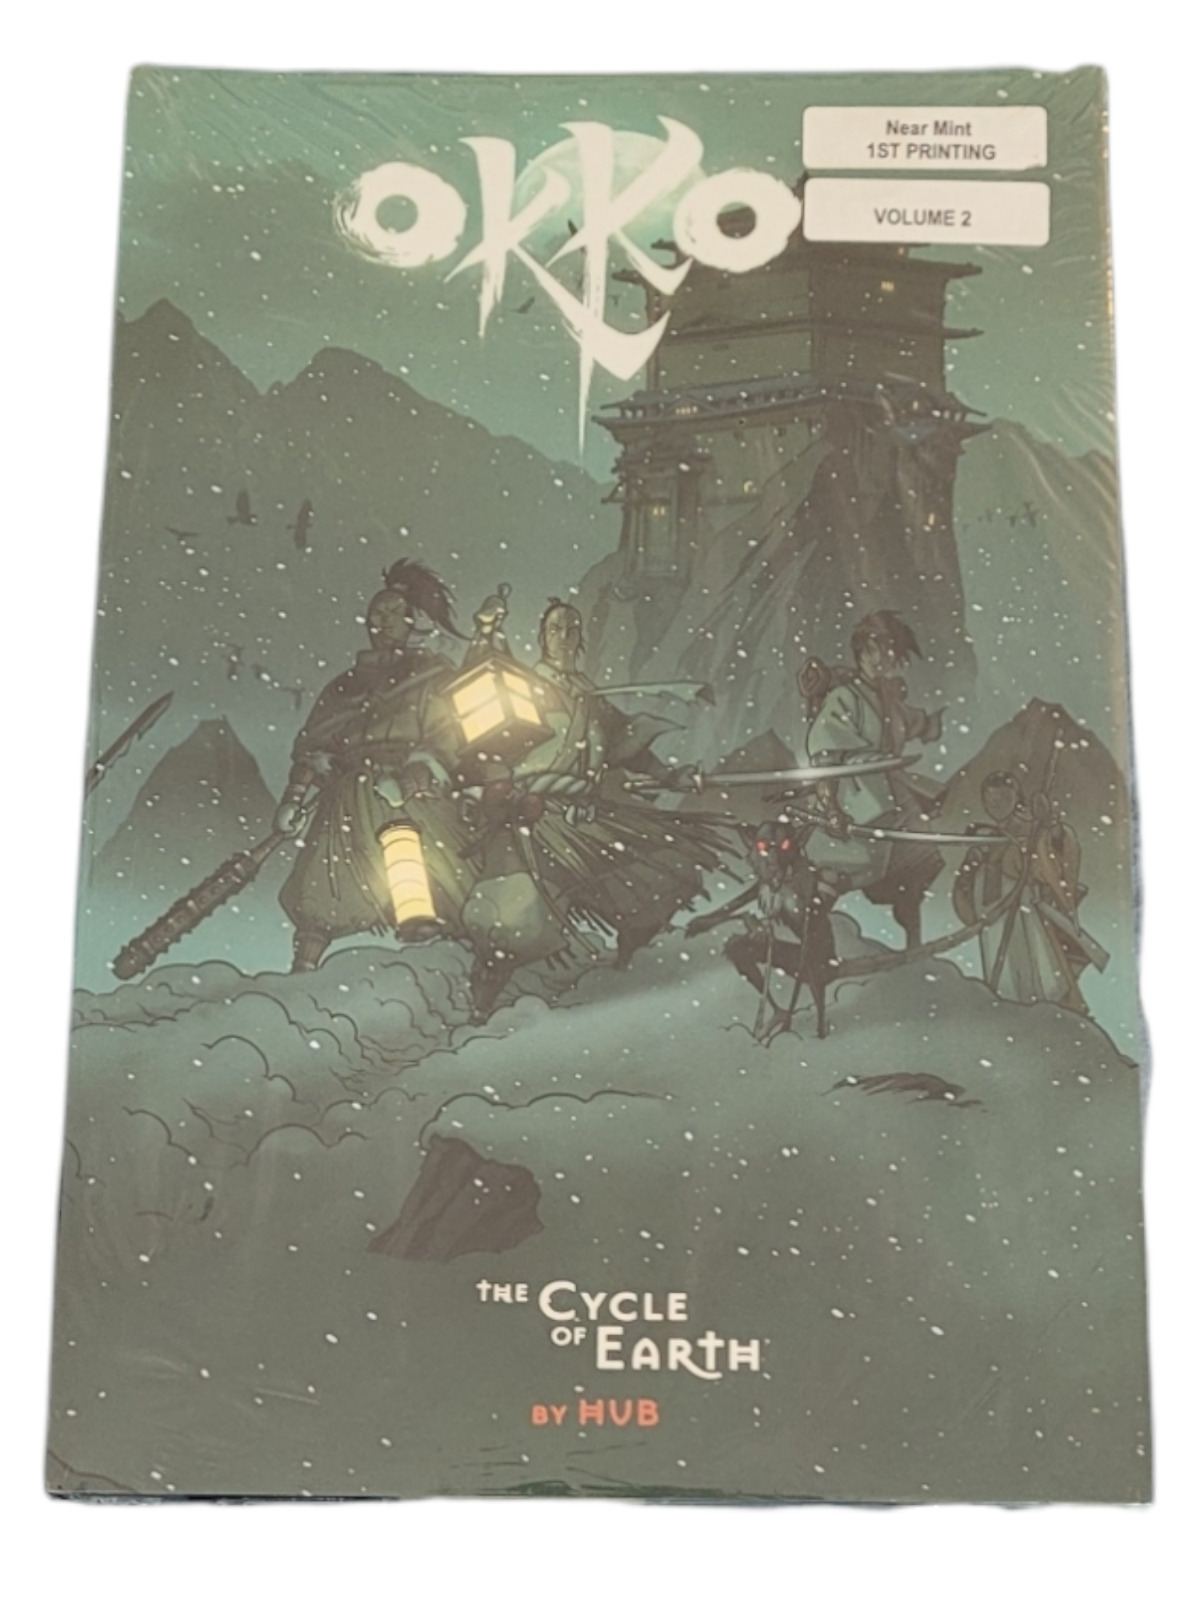 Okko: The Cycle of Earth  Vol 2 Archaia HUB Mature Manga Hardcover 1st Printing